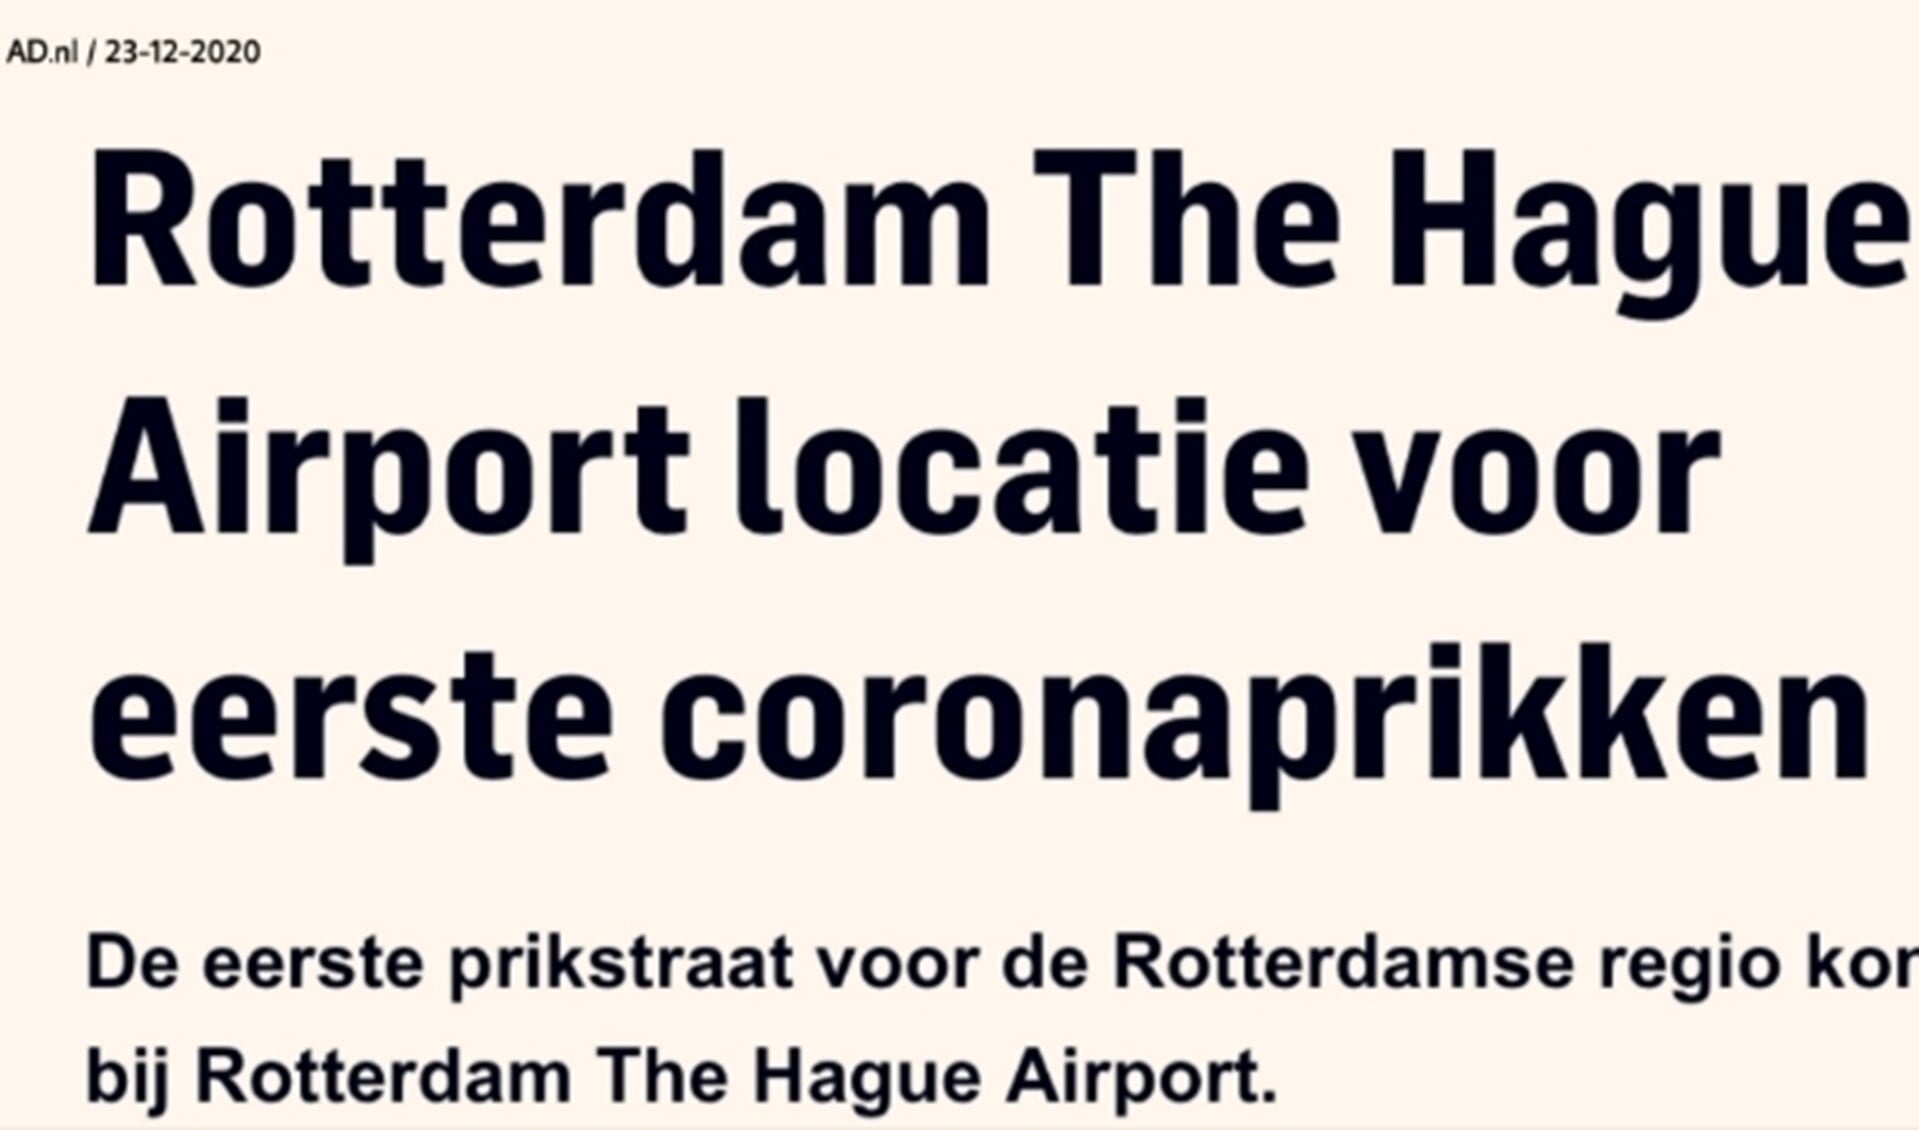 Berichtkop AD.nl